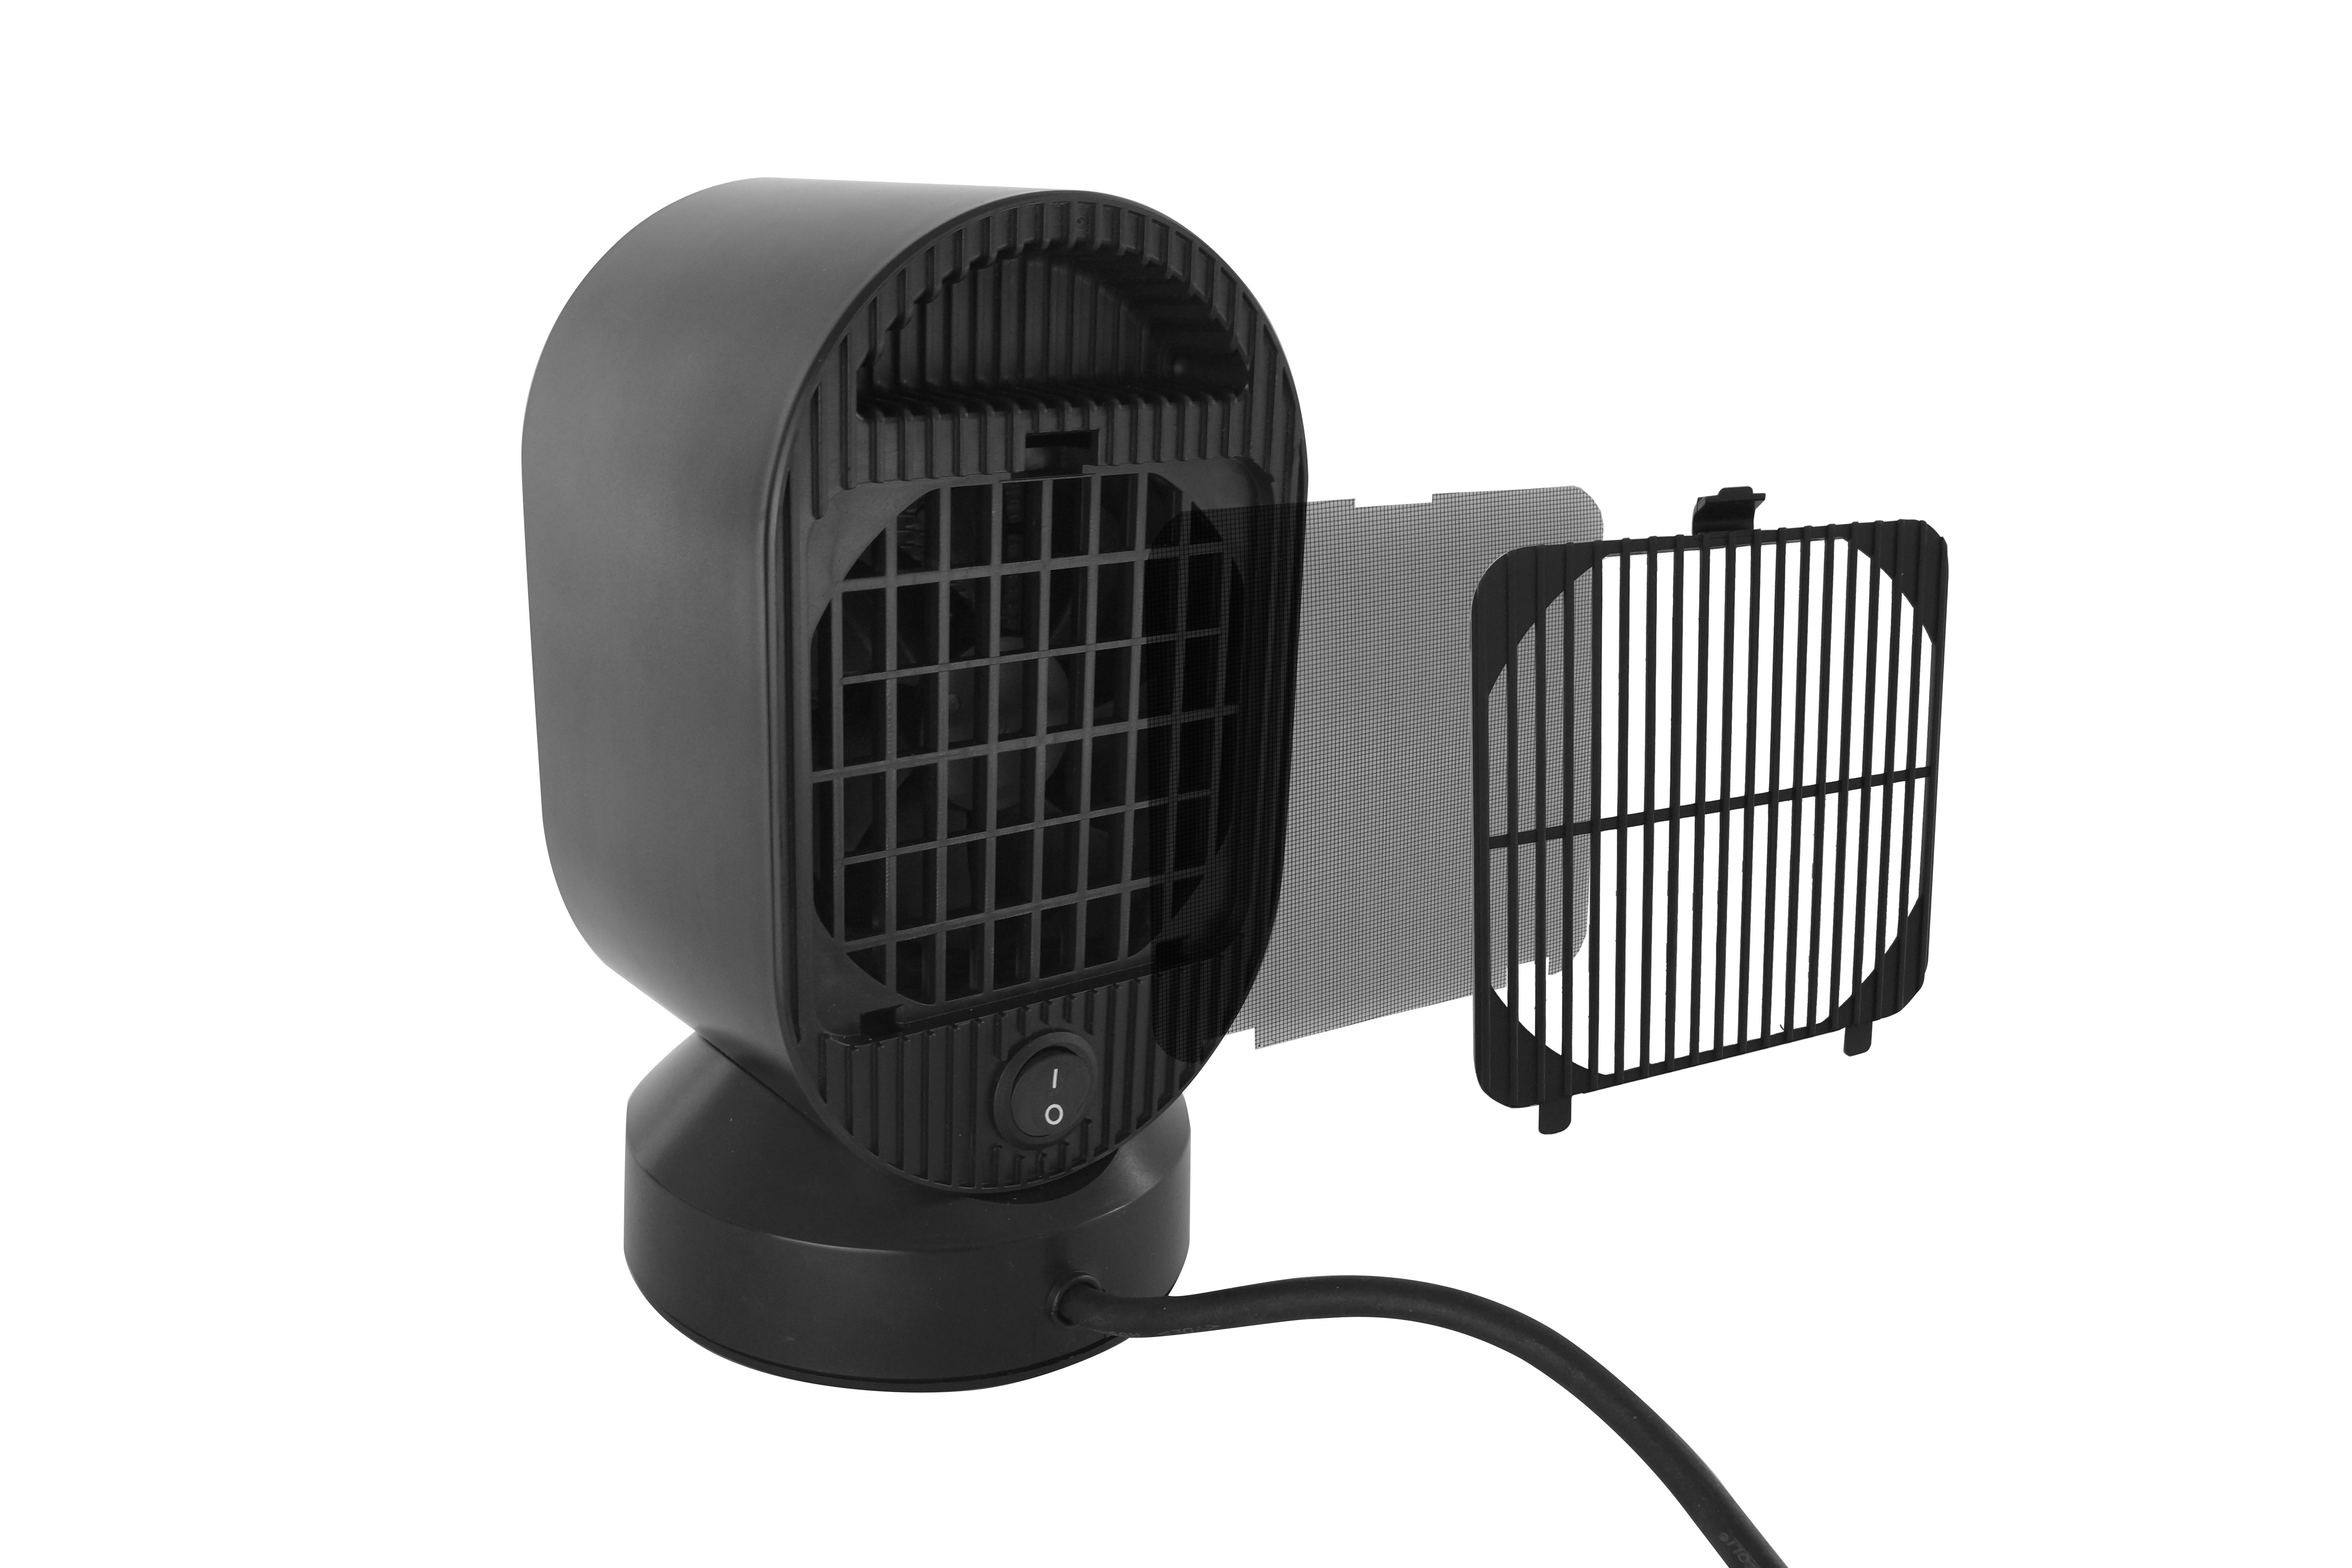 Smartech Warm Mini Oscillating Ceramic Heater SH-8388, , large image number 1